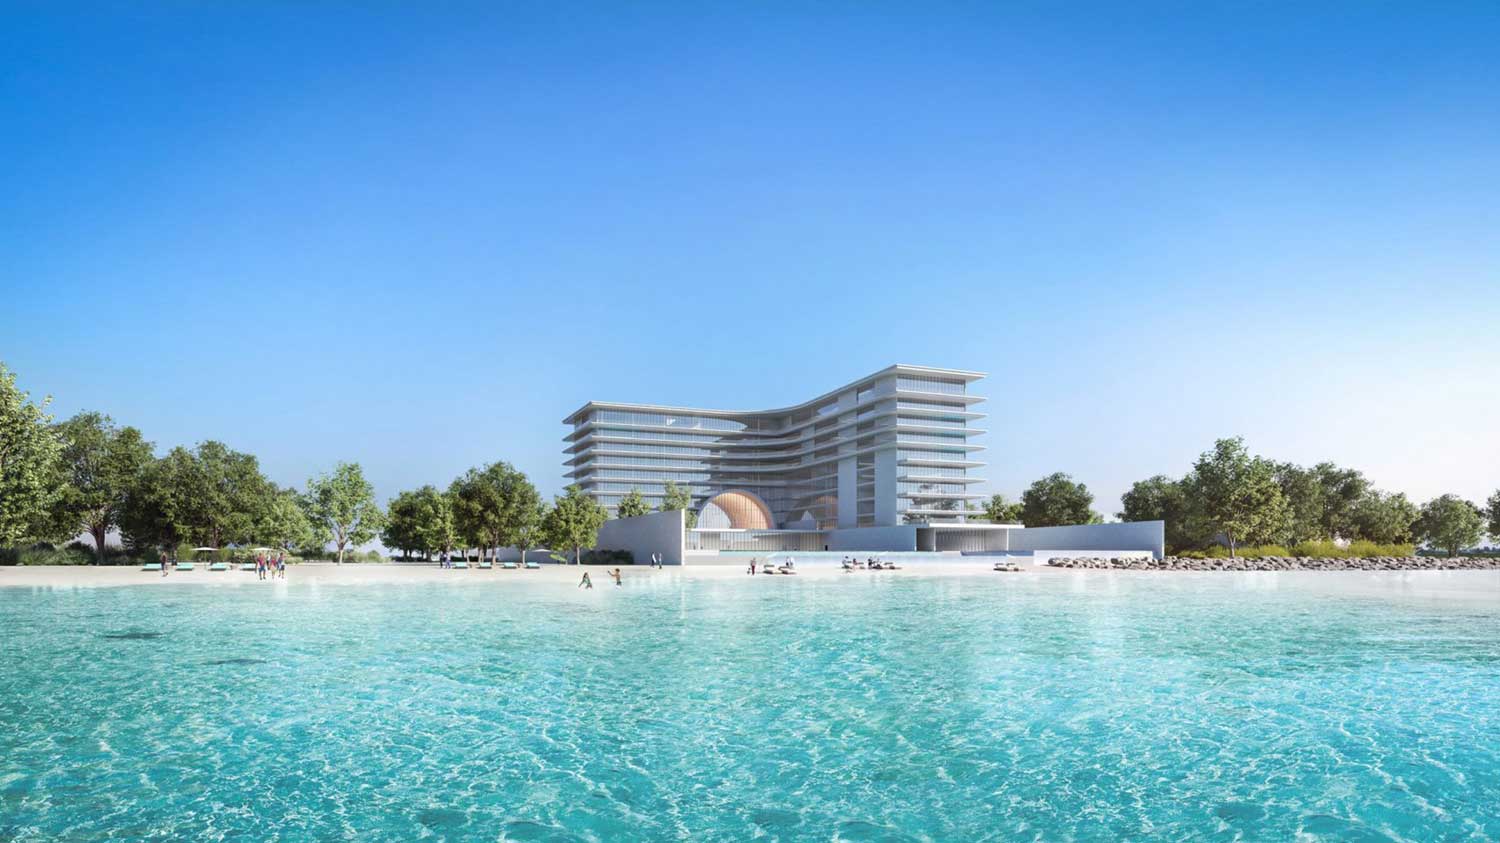 Armani Beach Residences at Palm Jumeirah, Dubai, UAE / Tadao Ando